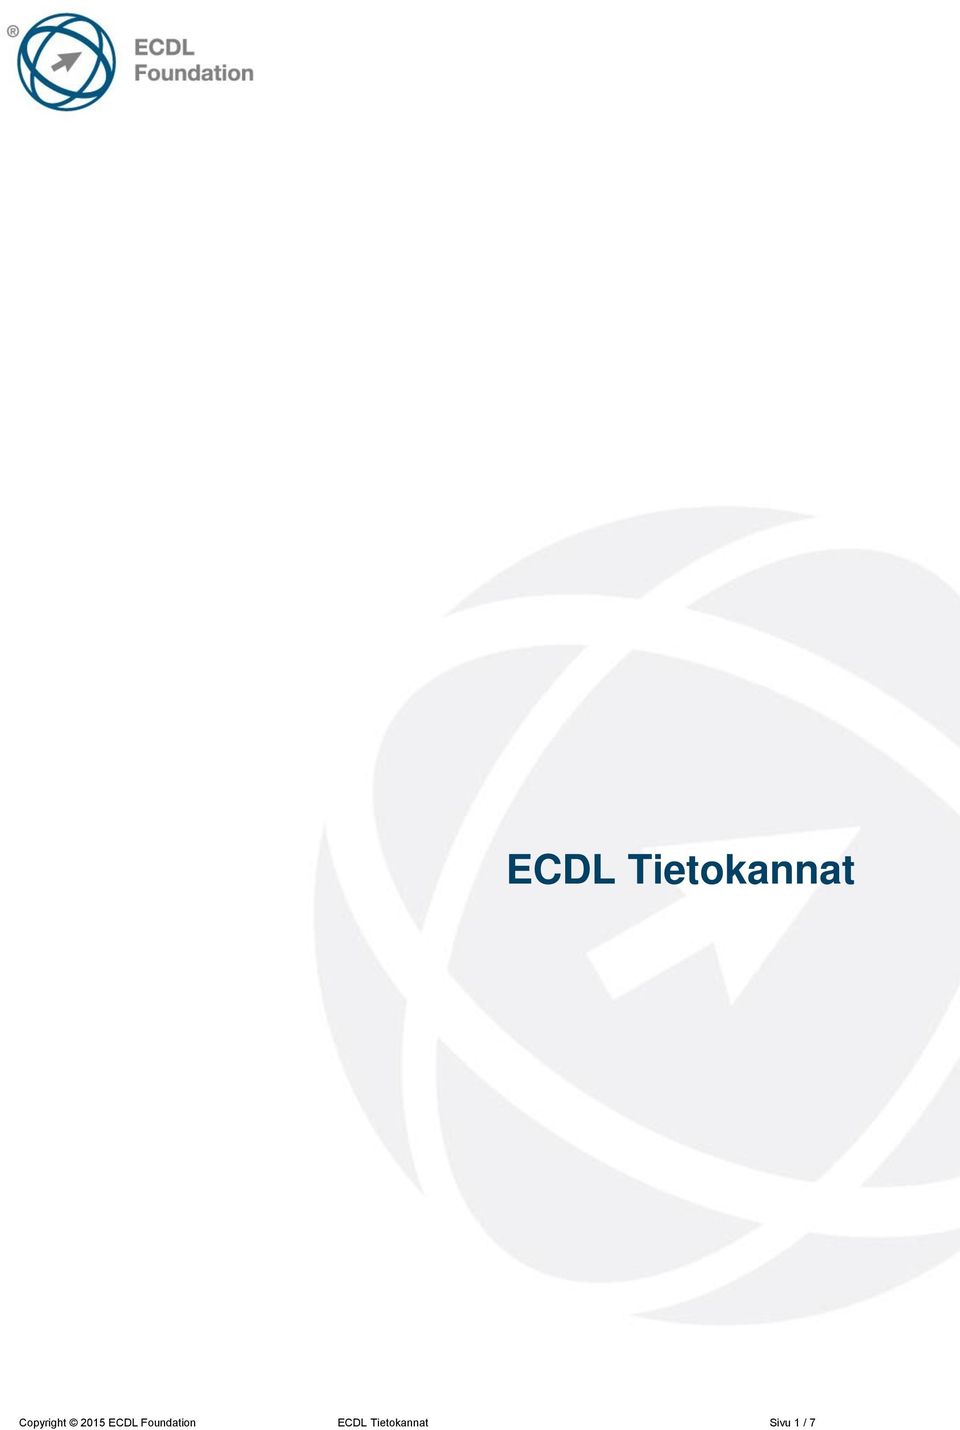 ECDL Foundation 